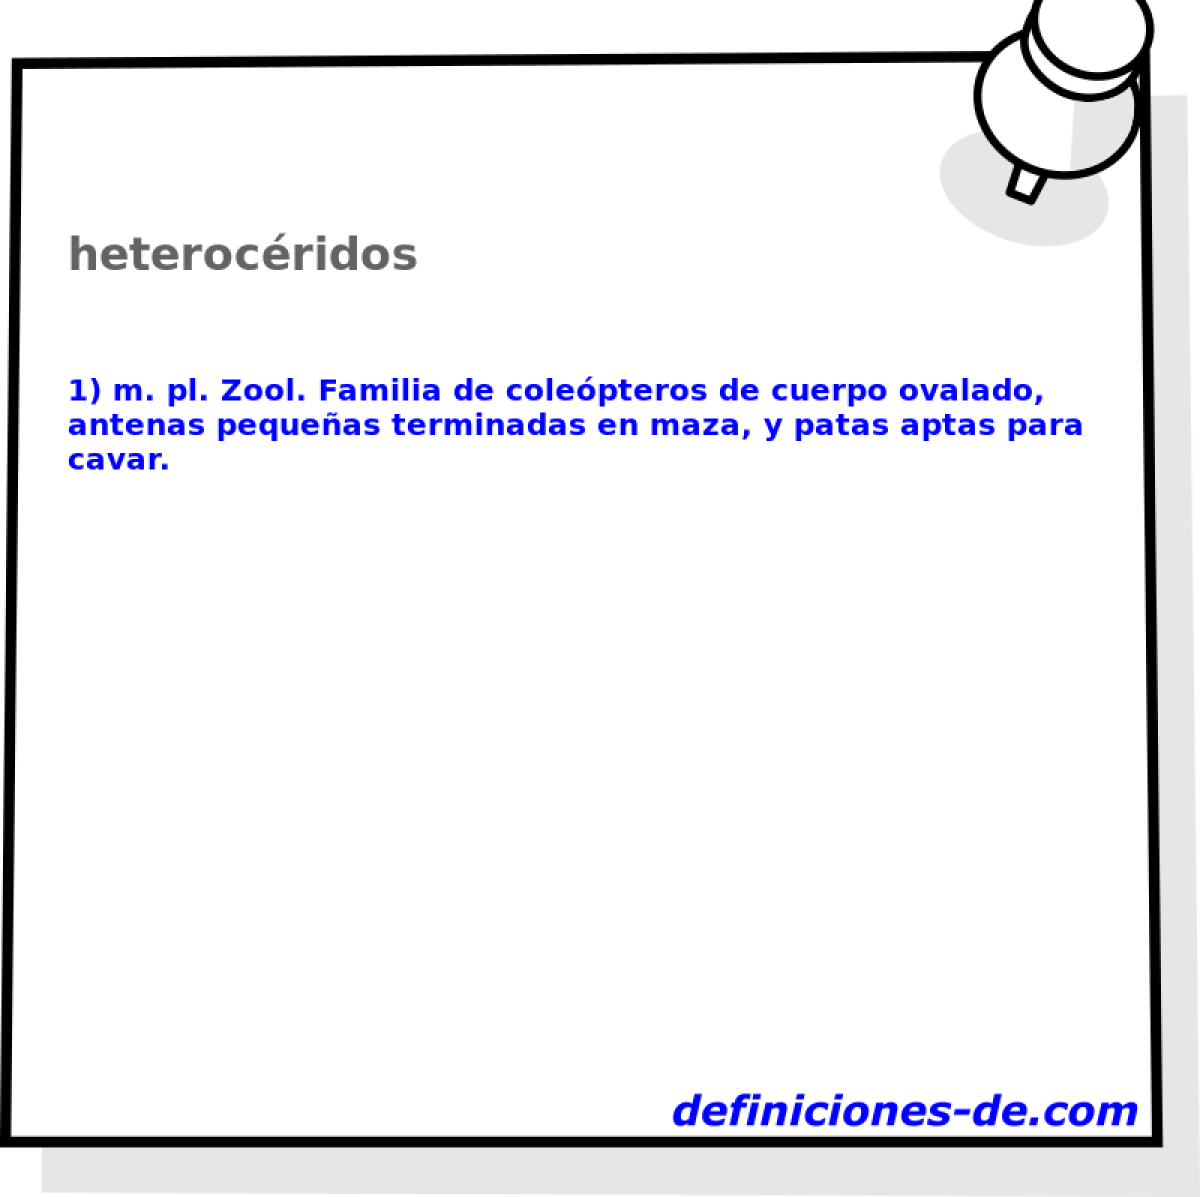 heterocridos 